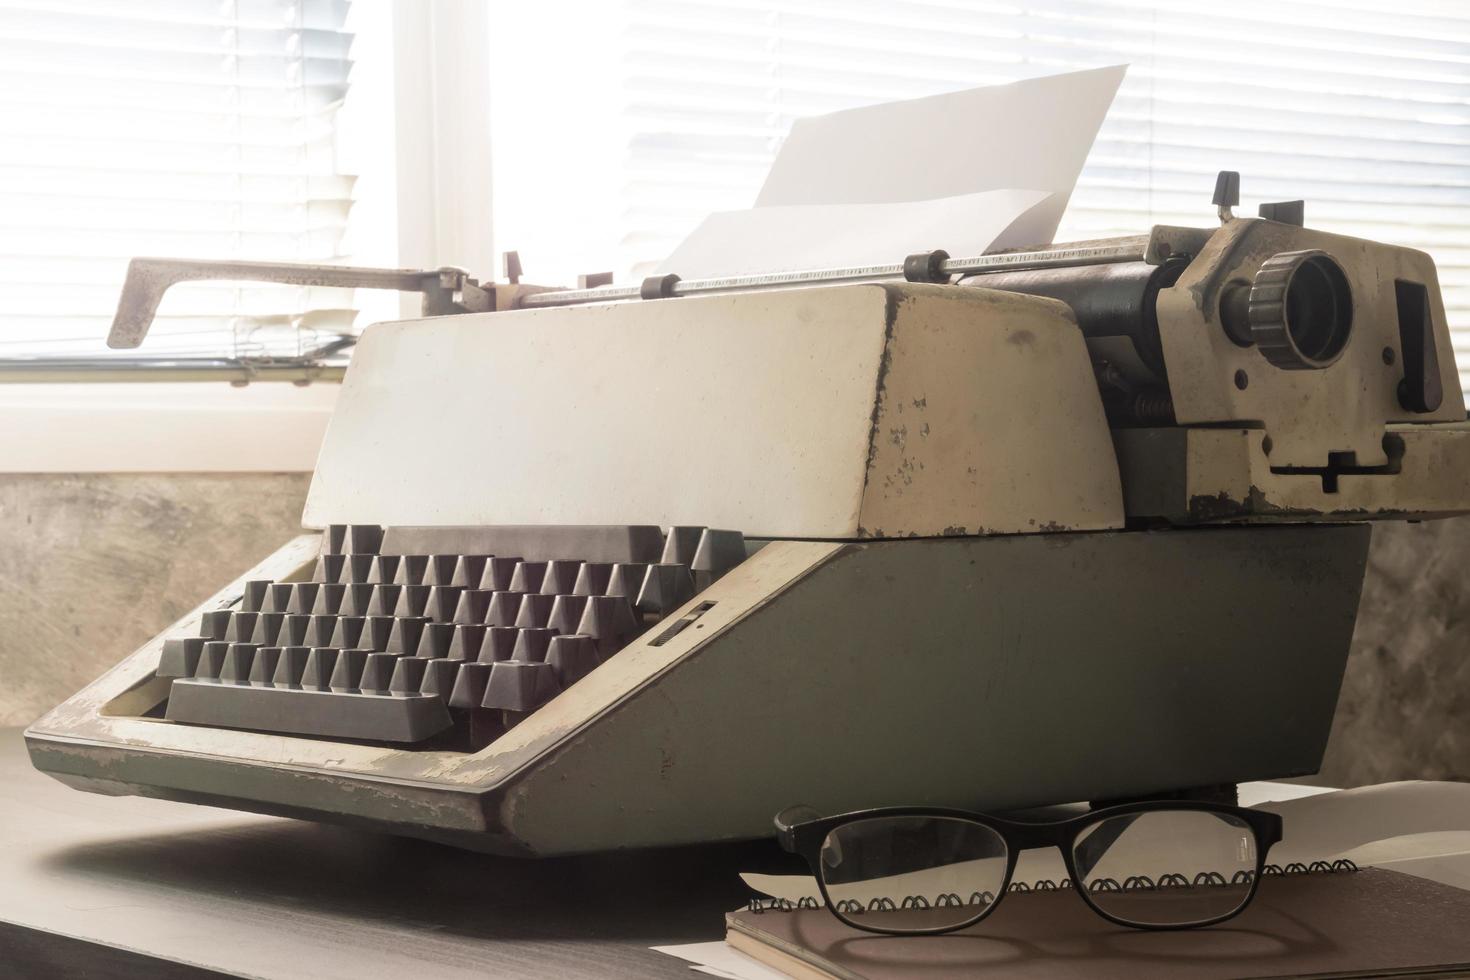 Old Typewriter on the desk. Vintage tone photo